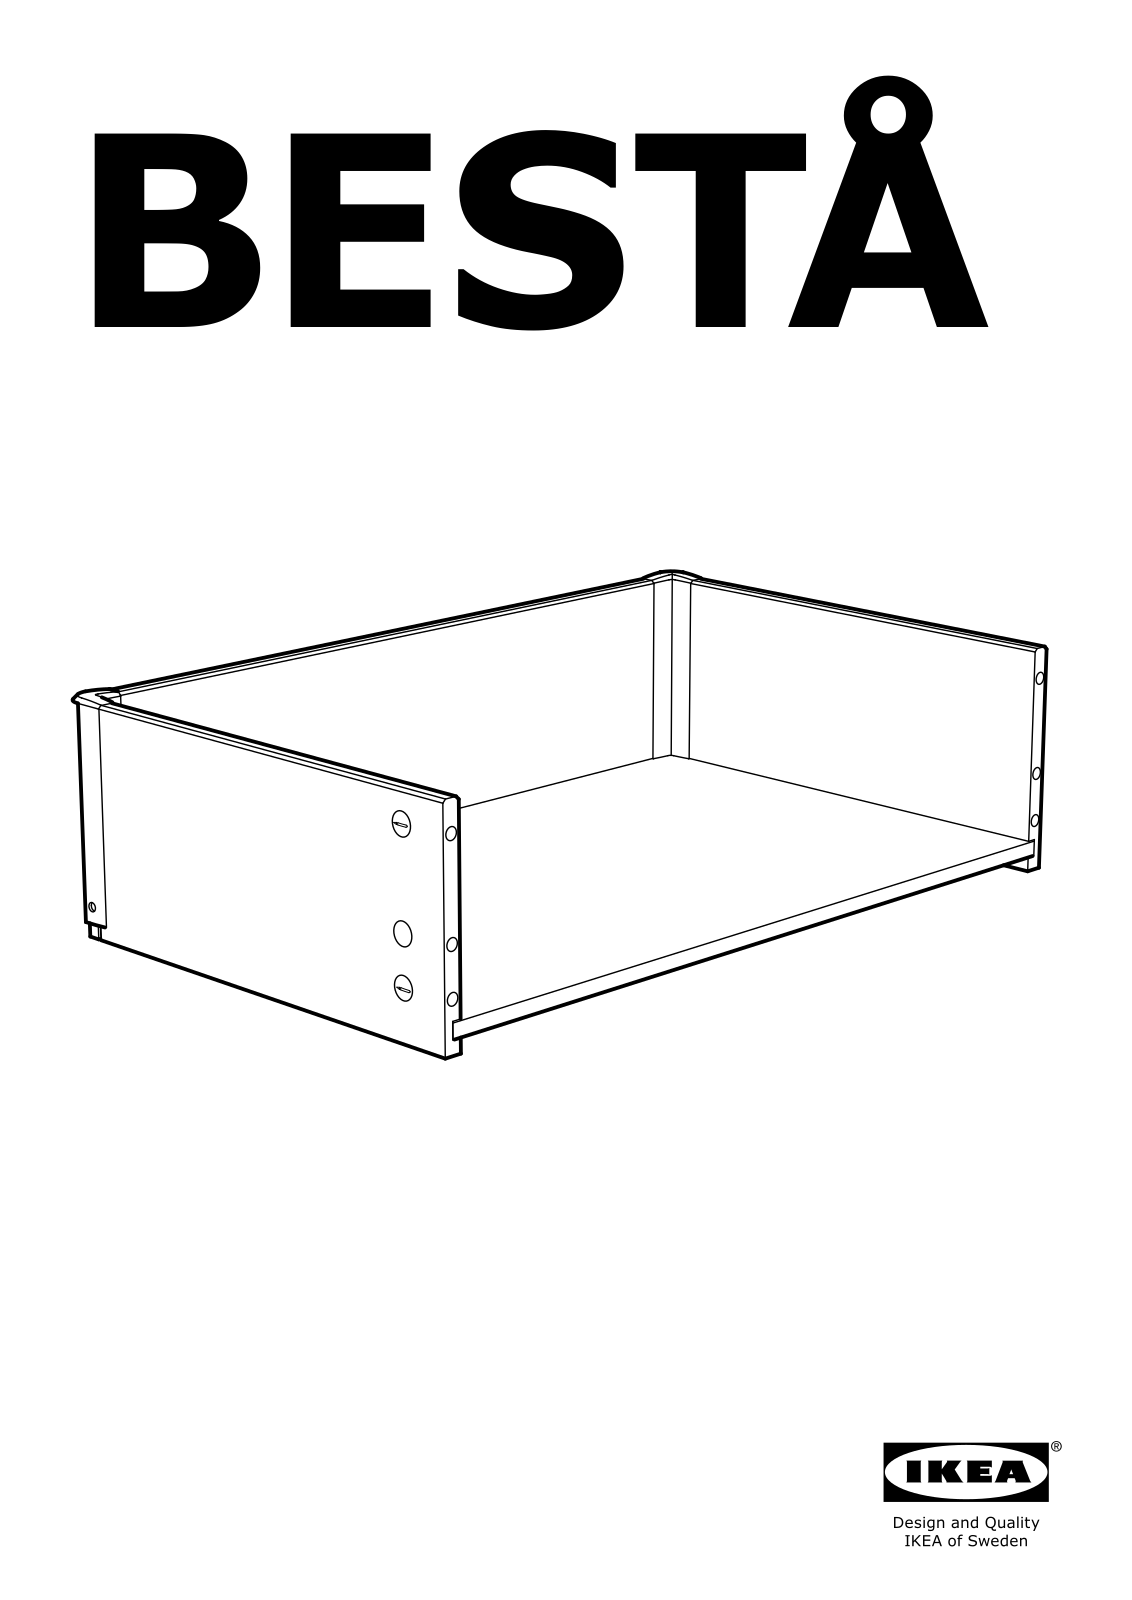 Ikea S39136922, S49086714, S49098552, S49137469, S59062779 Assembly instructions